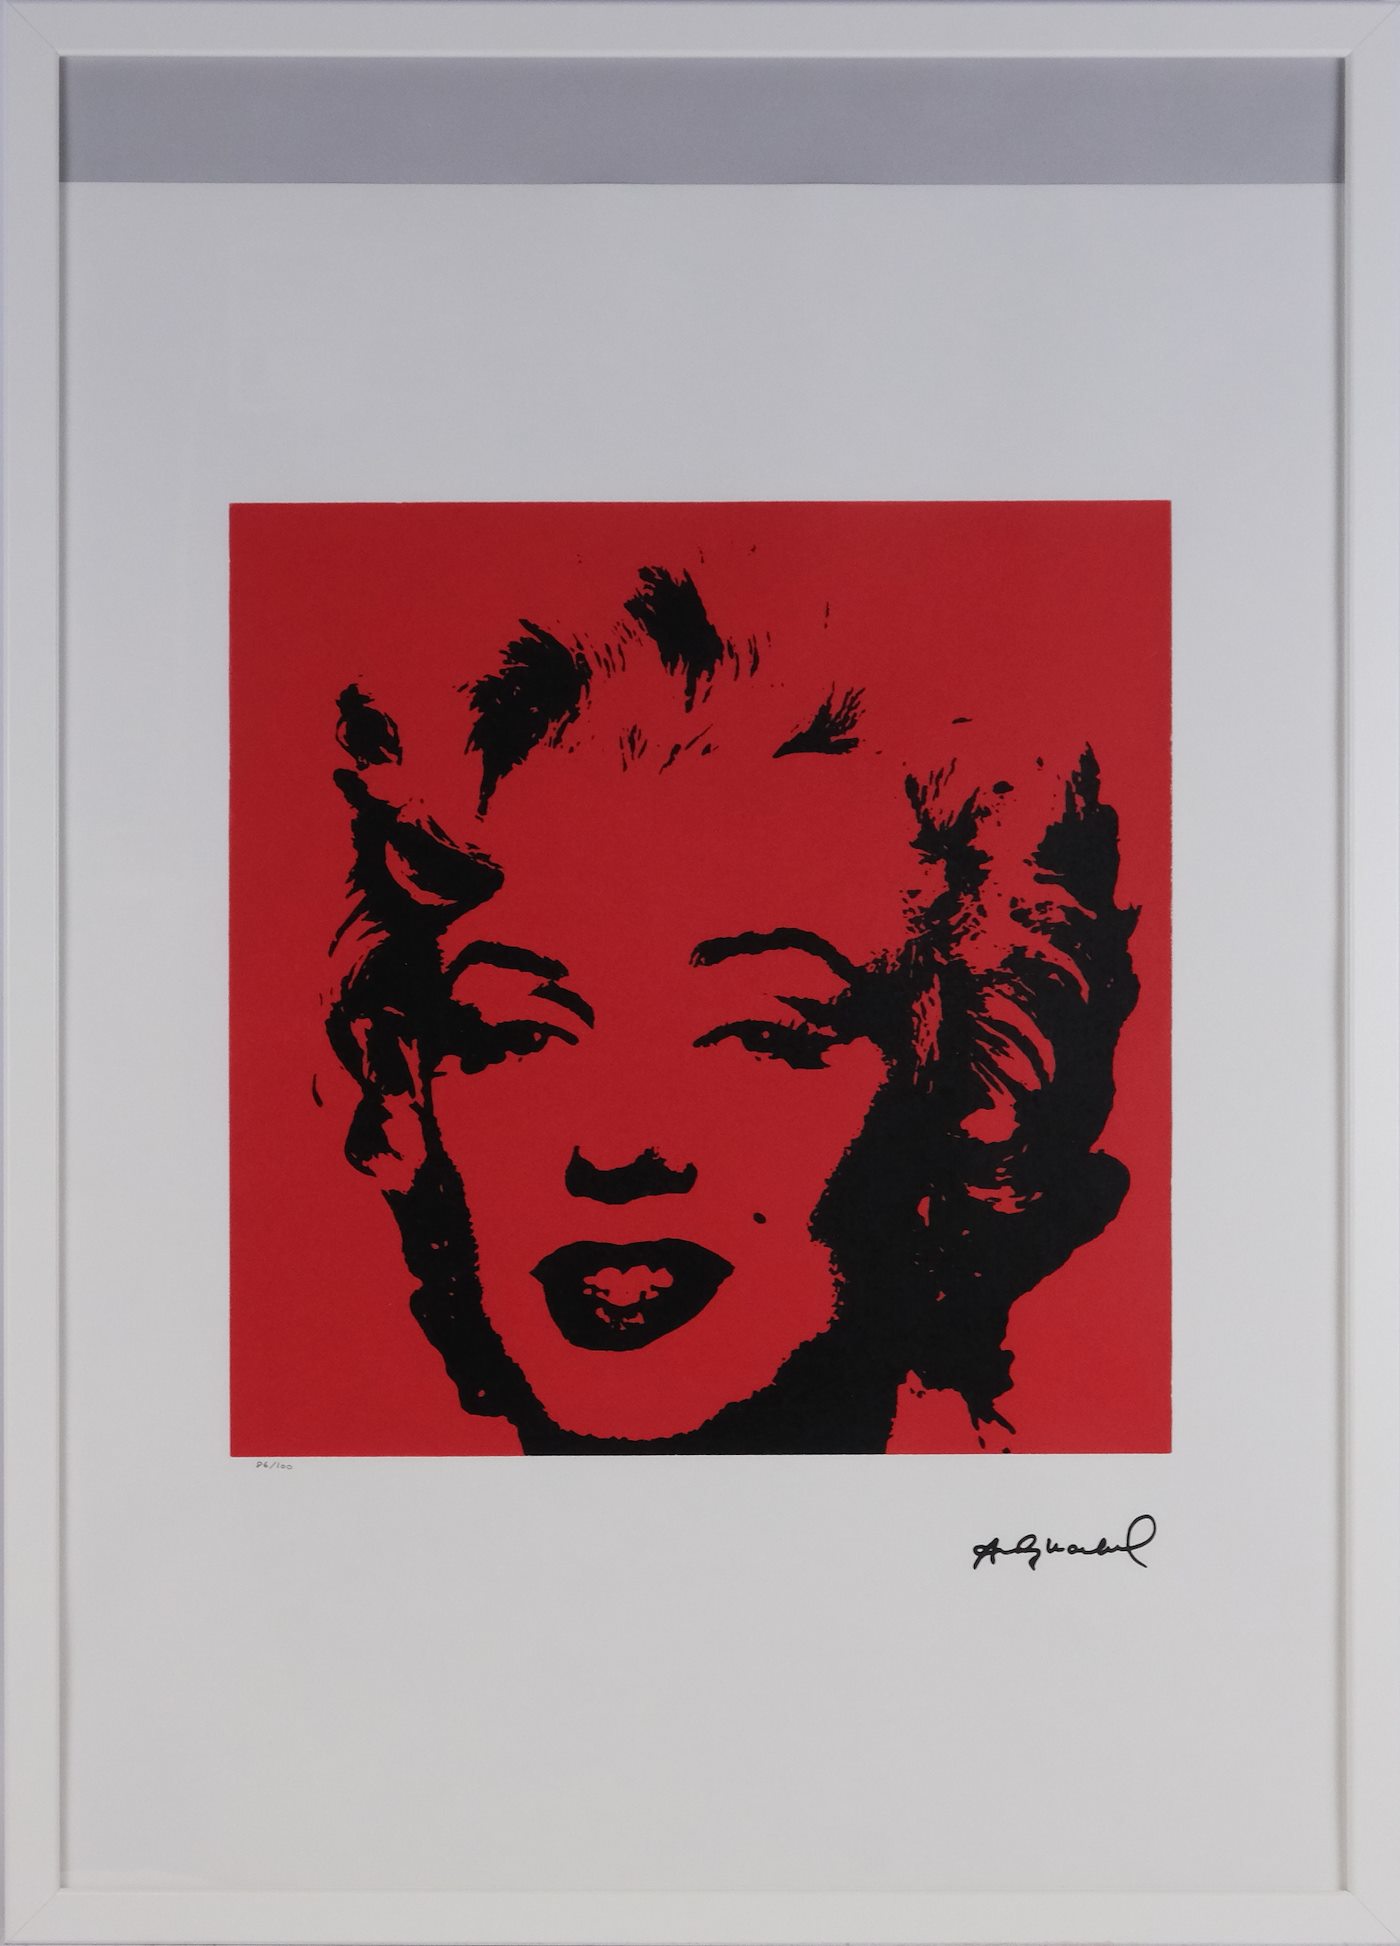 Andy Warhol - Marilyn Monroe